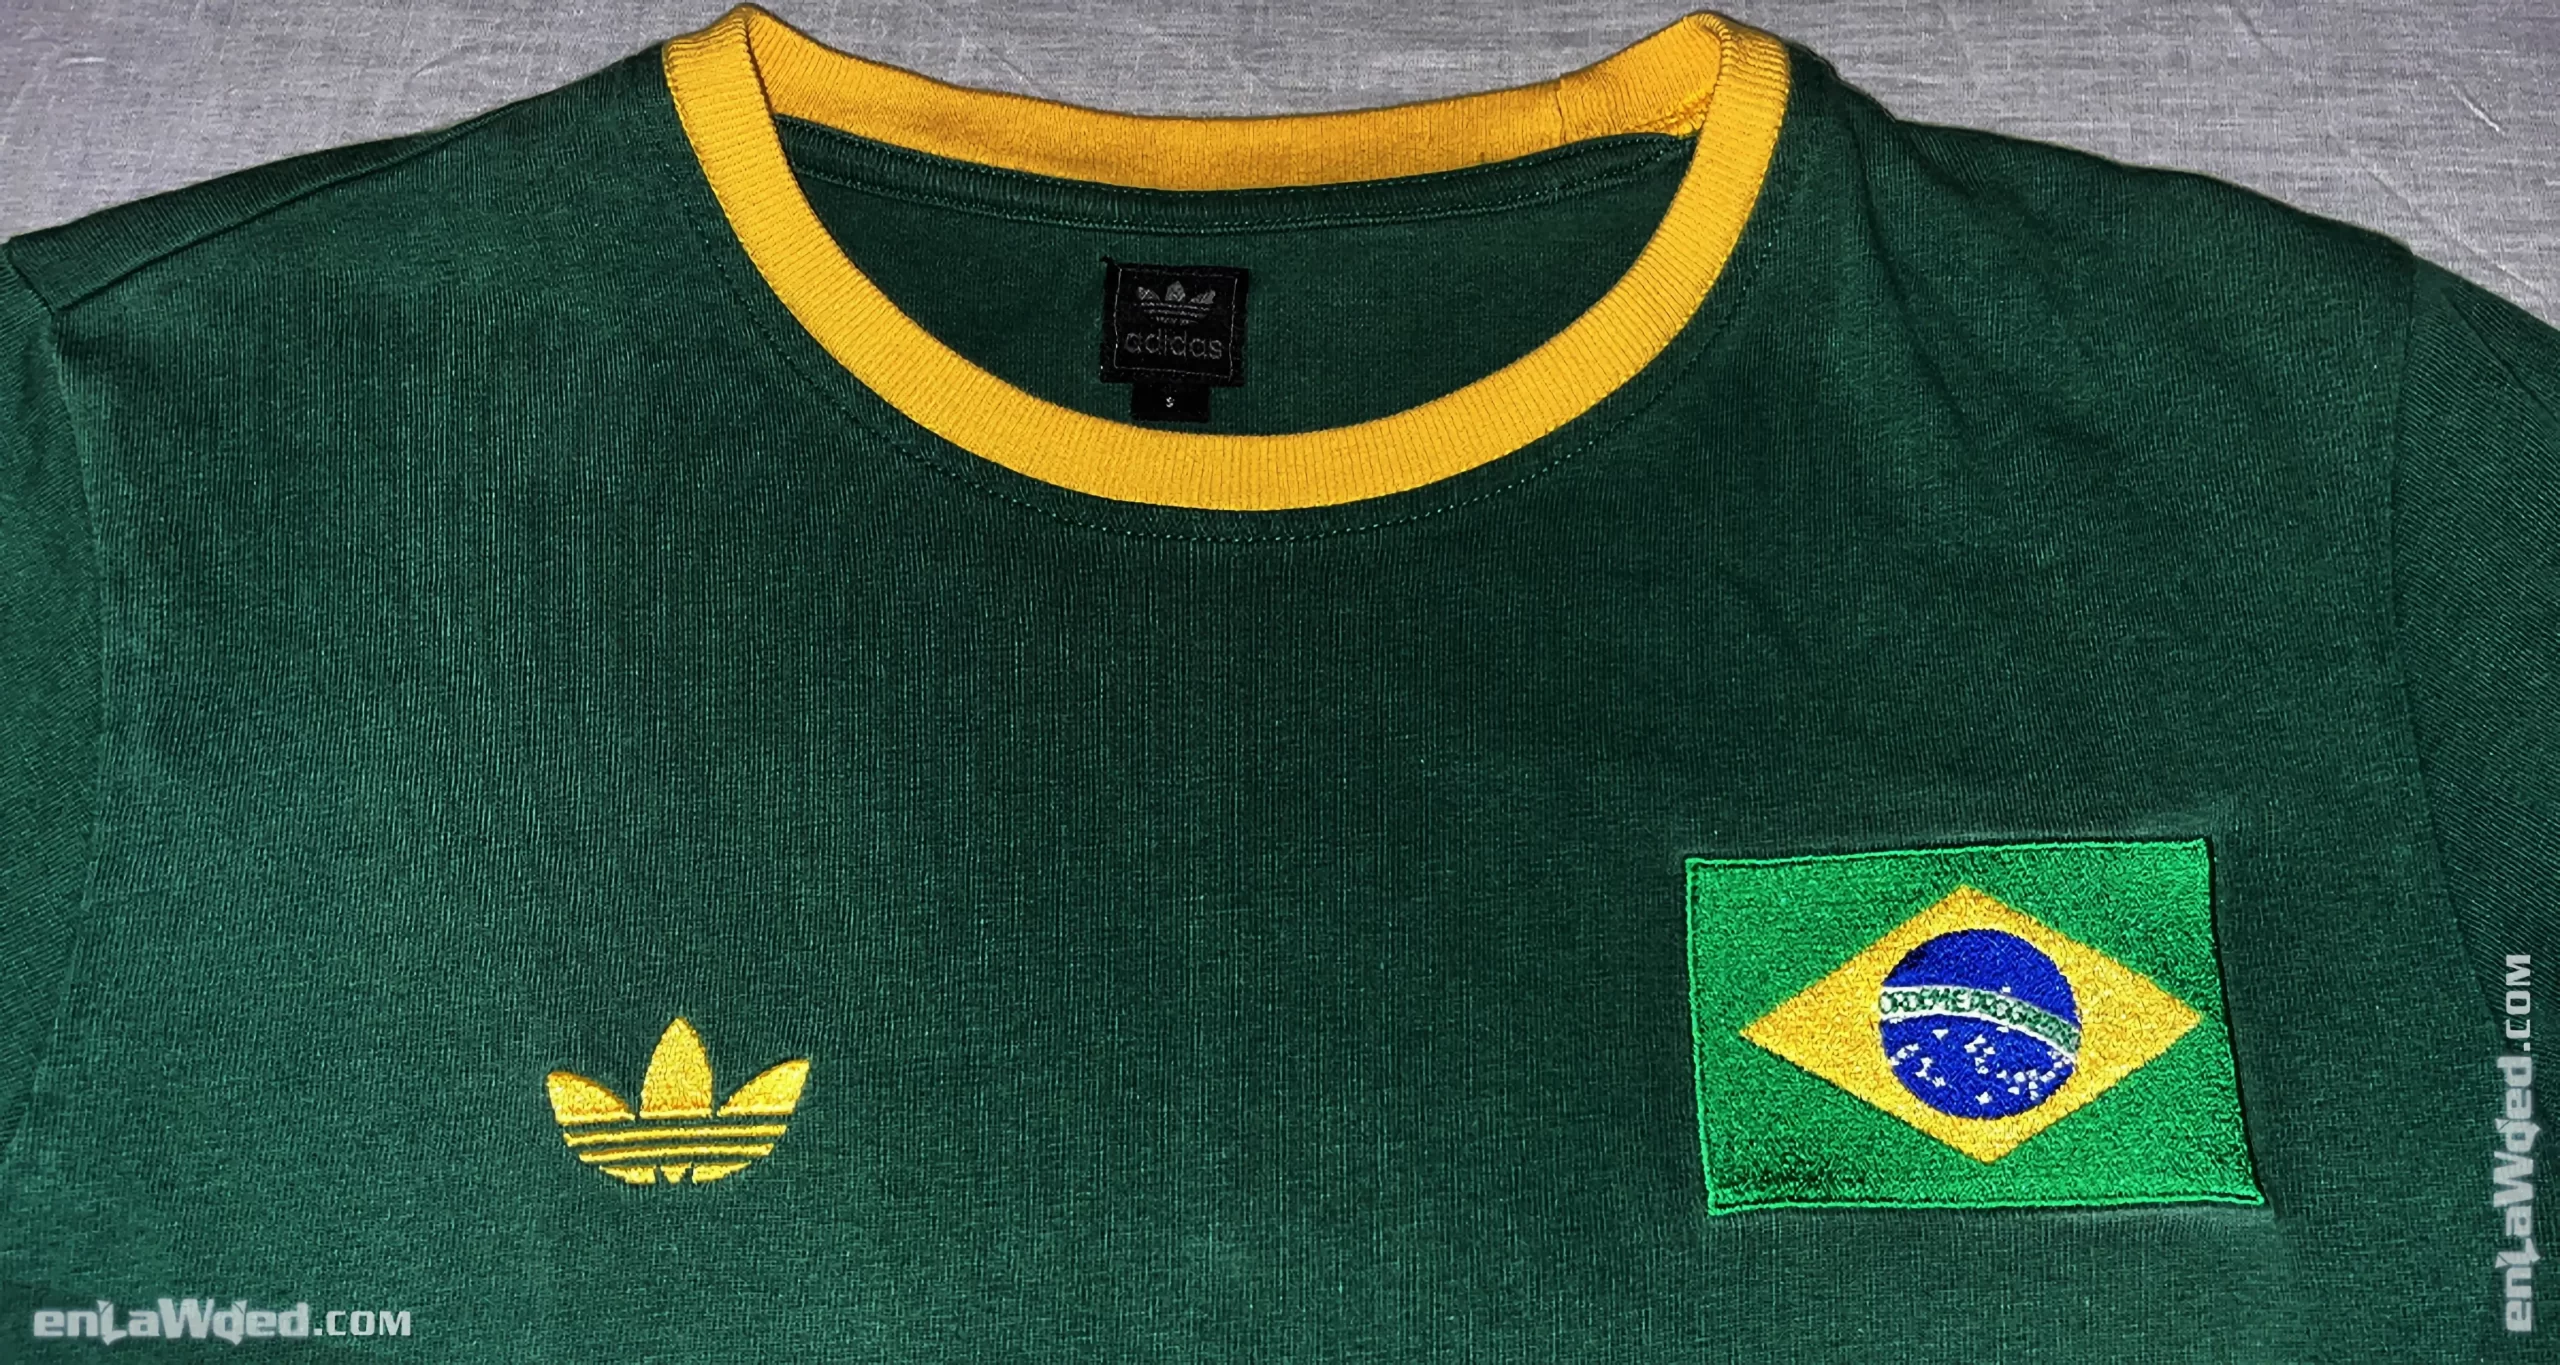 Men’s 2006 Brasil ’70 Green T-Shirt by Adidas Originals: Direct (EnLawded.com file #lp1me8xm126151c7cqvdtauek)